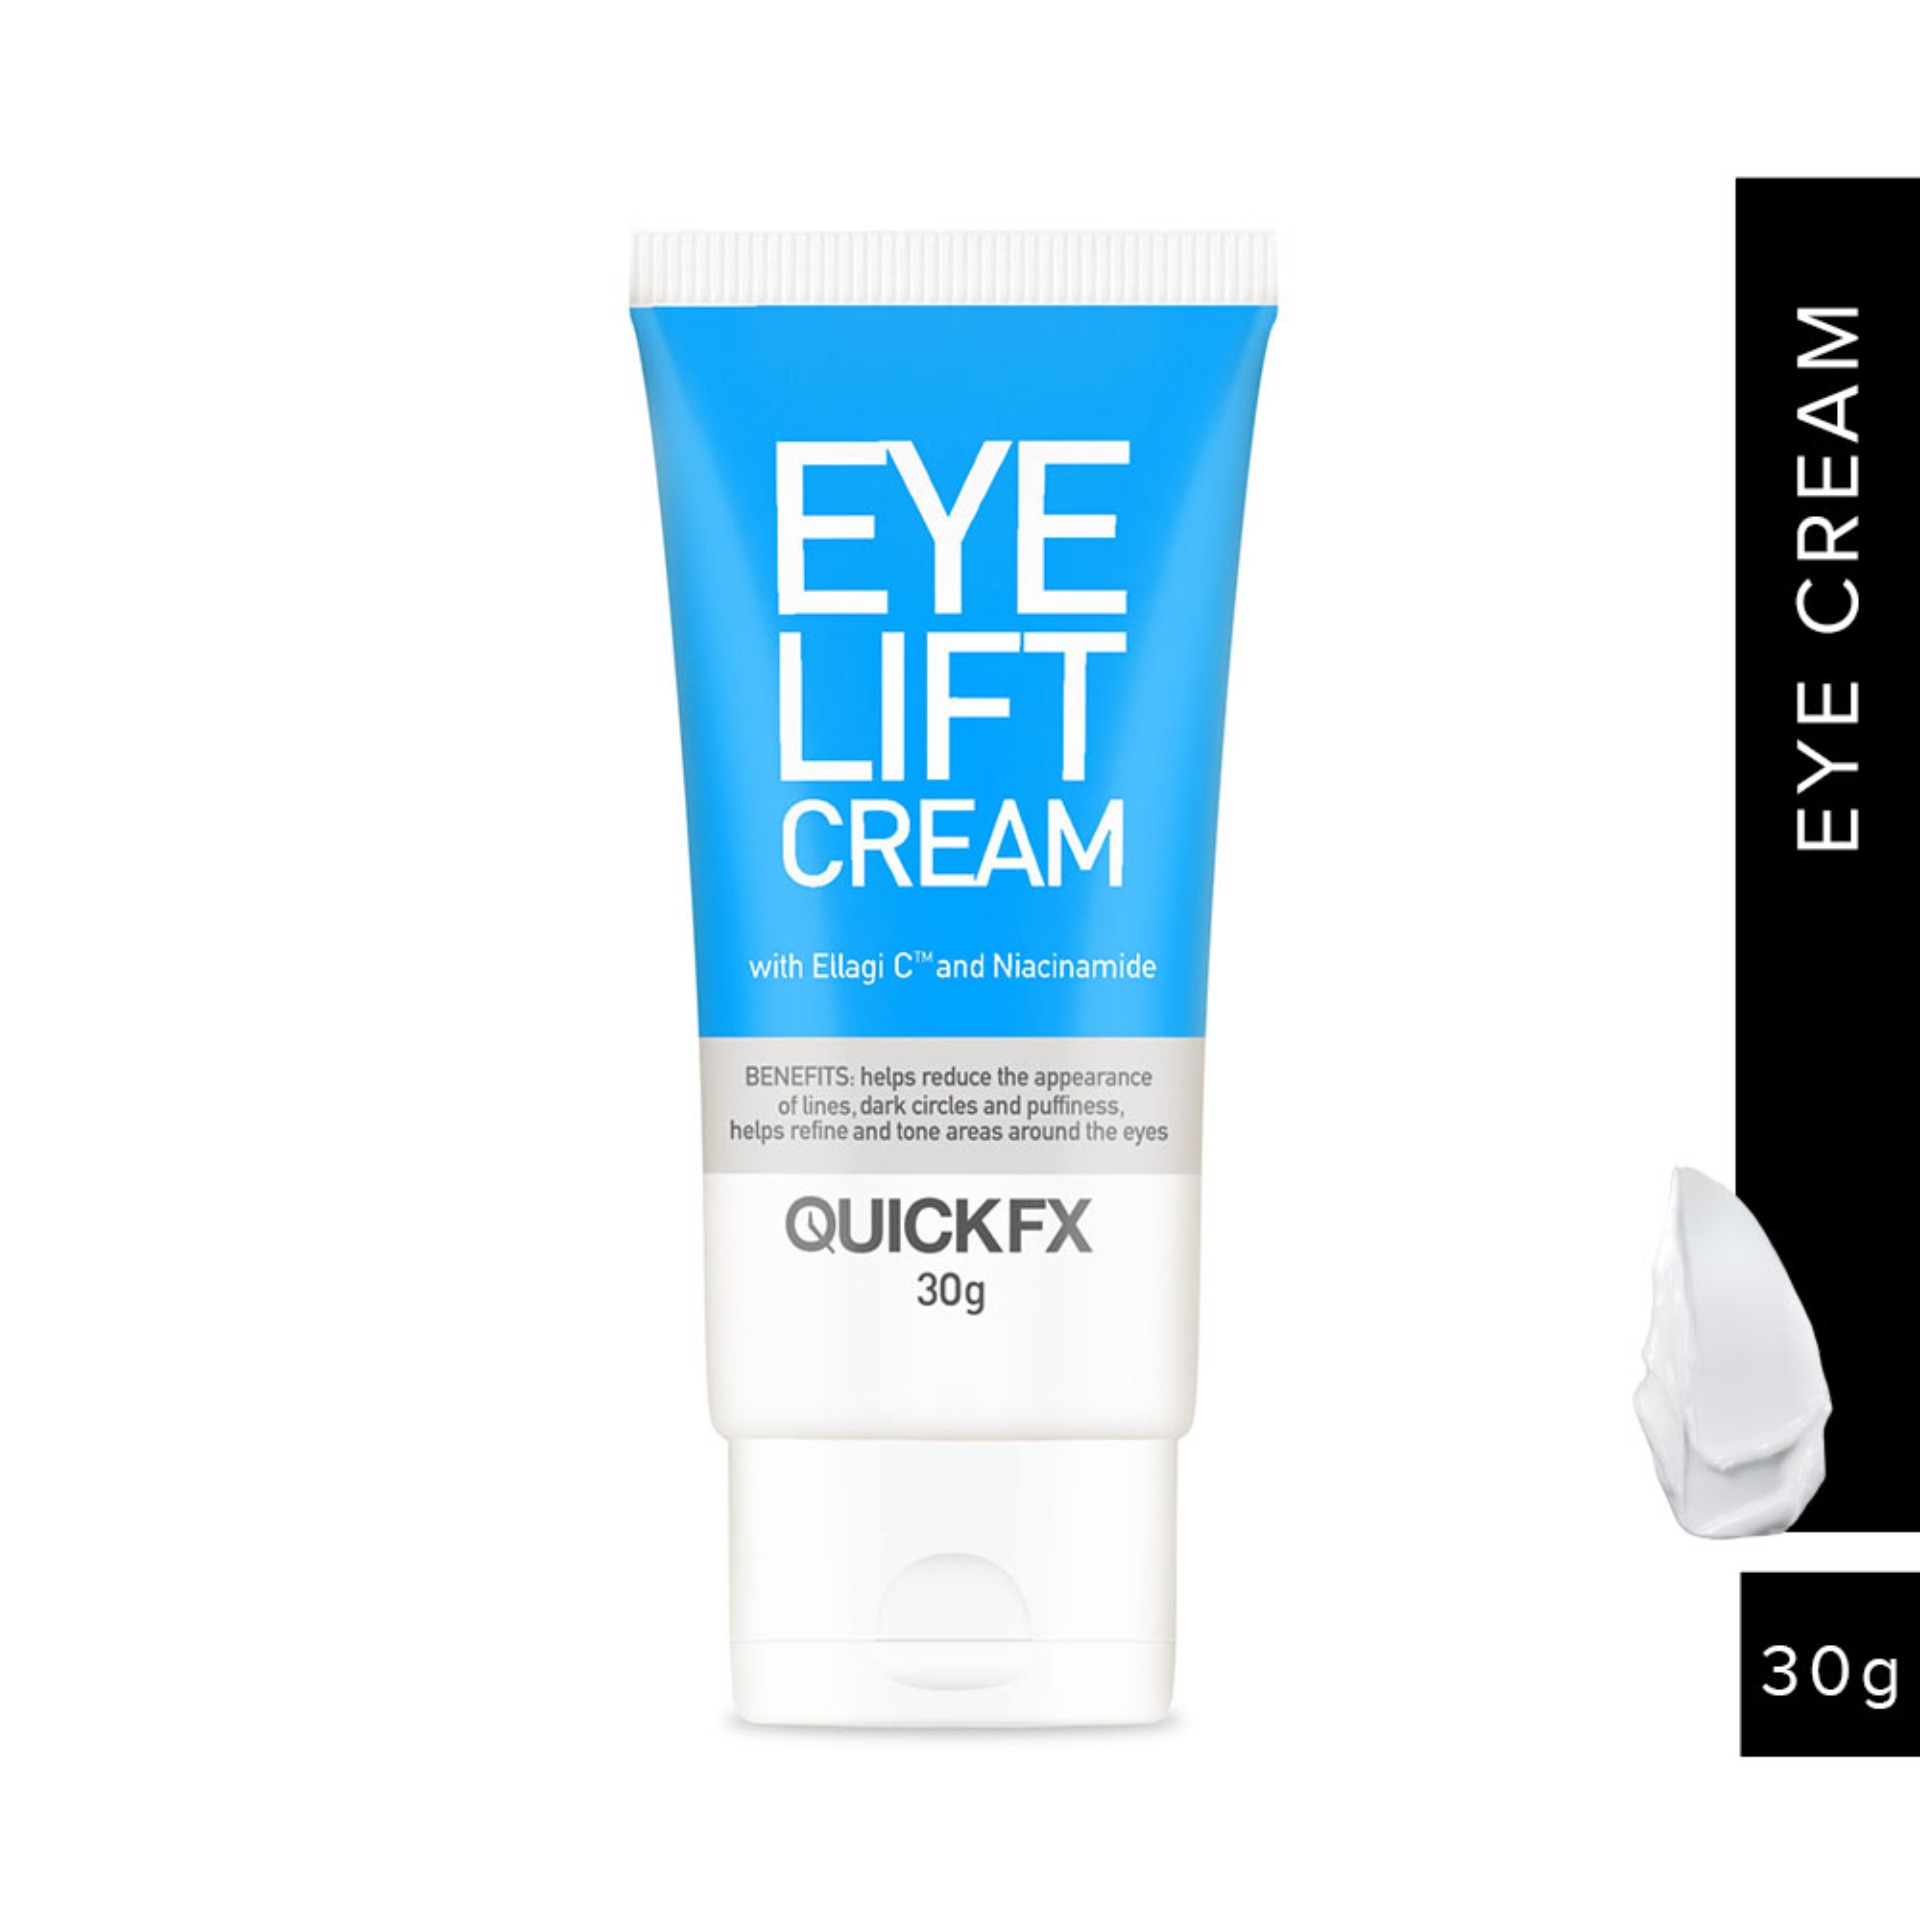 eye lift cream